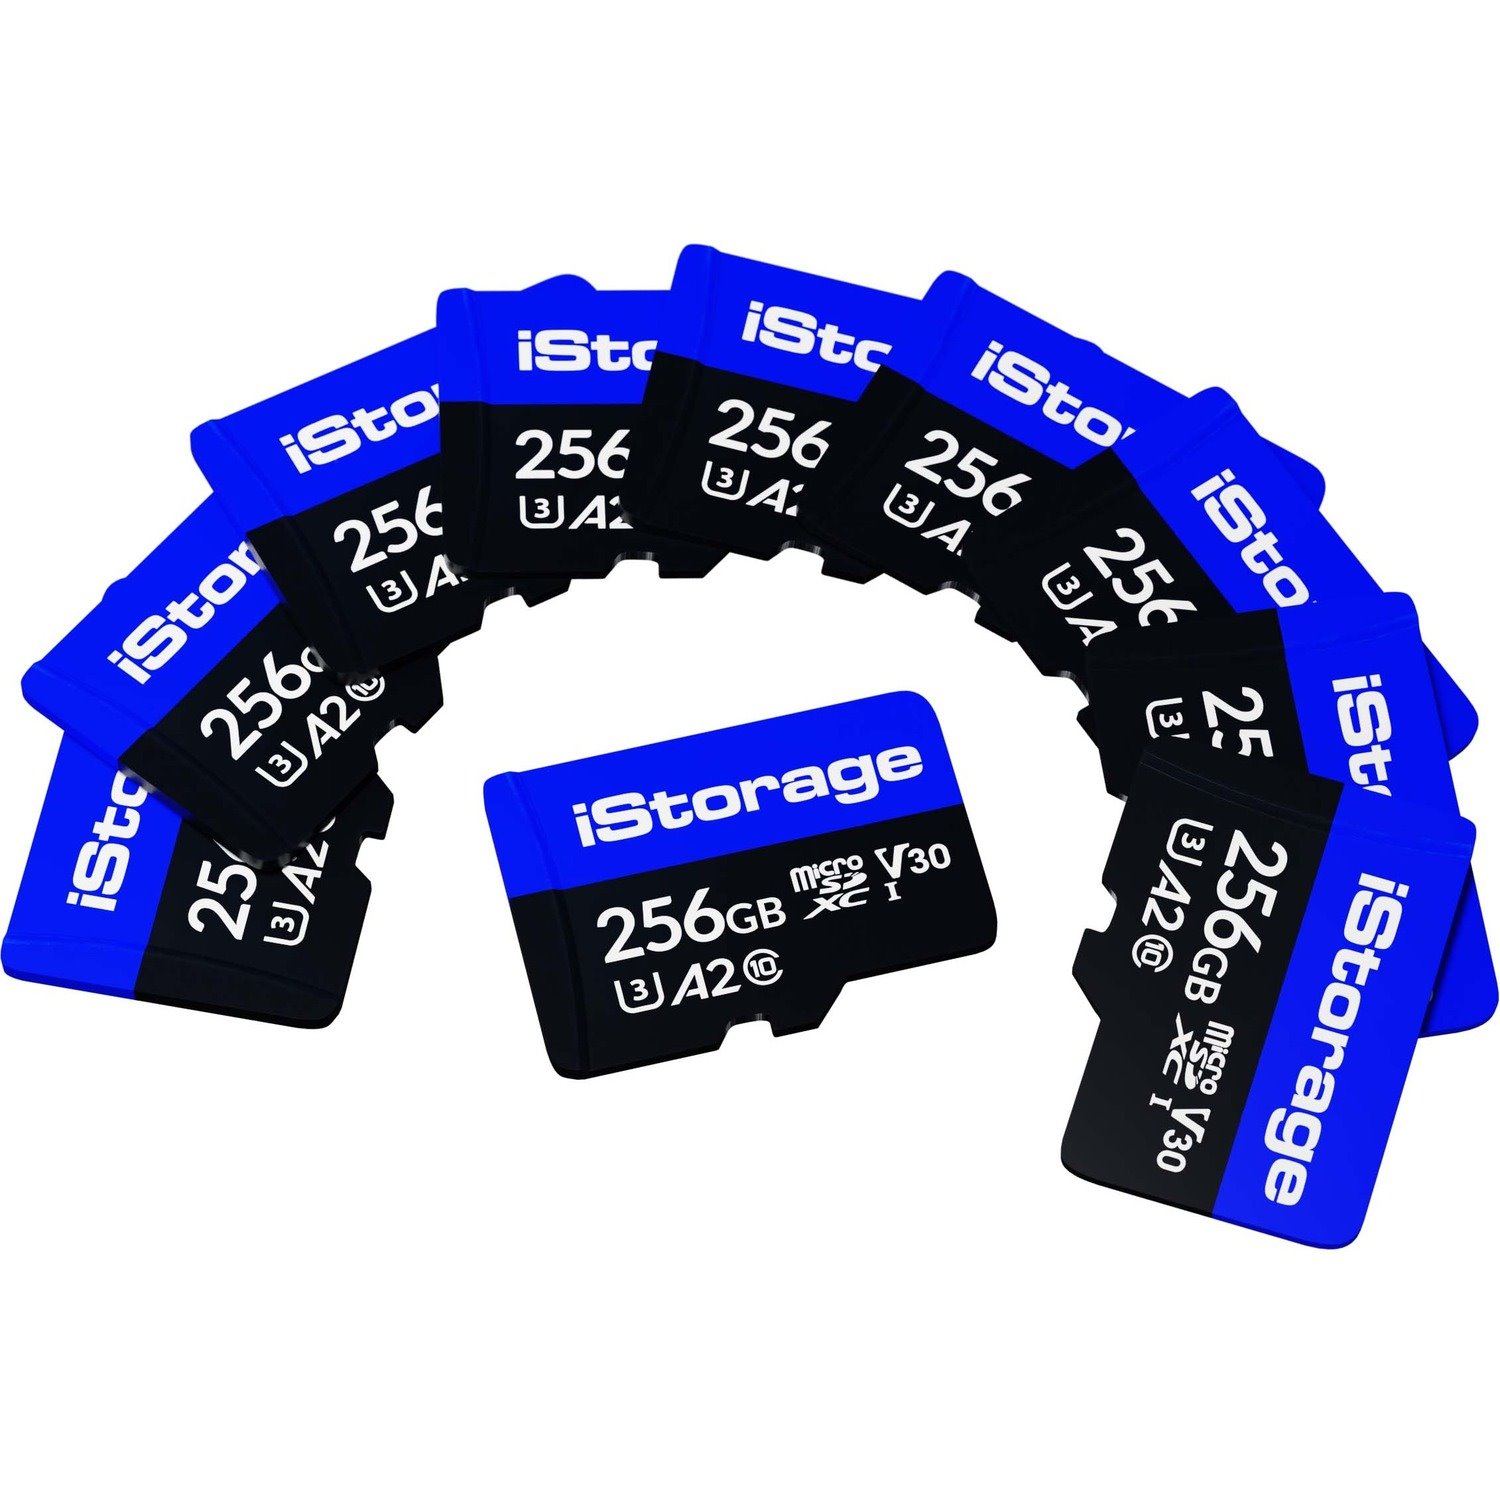 iStorage 256 GB microSDXC - 10 Pack